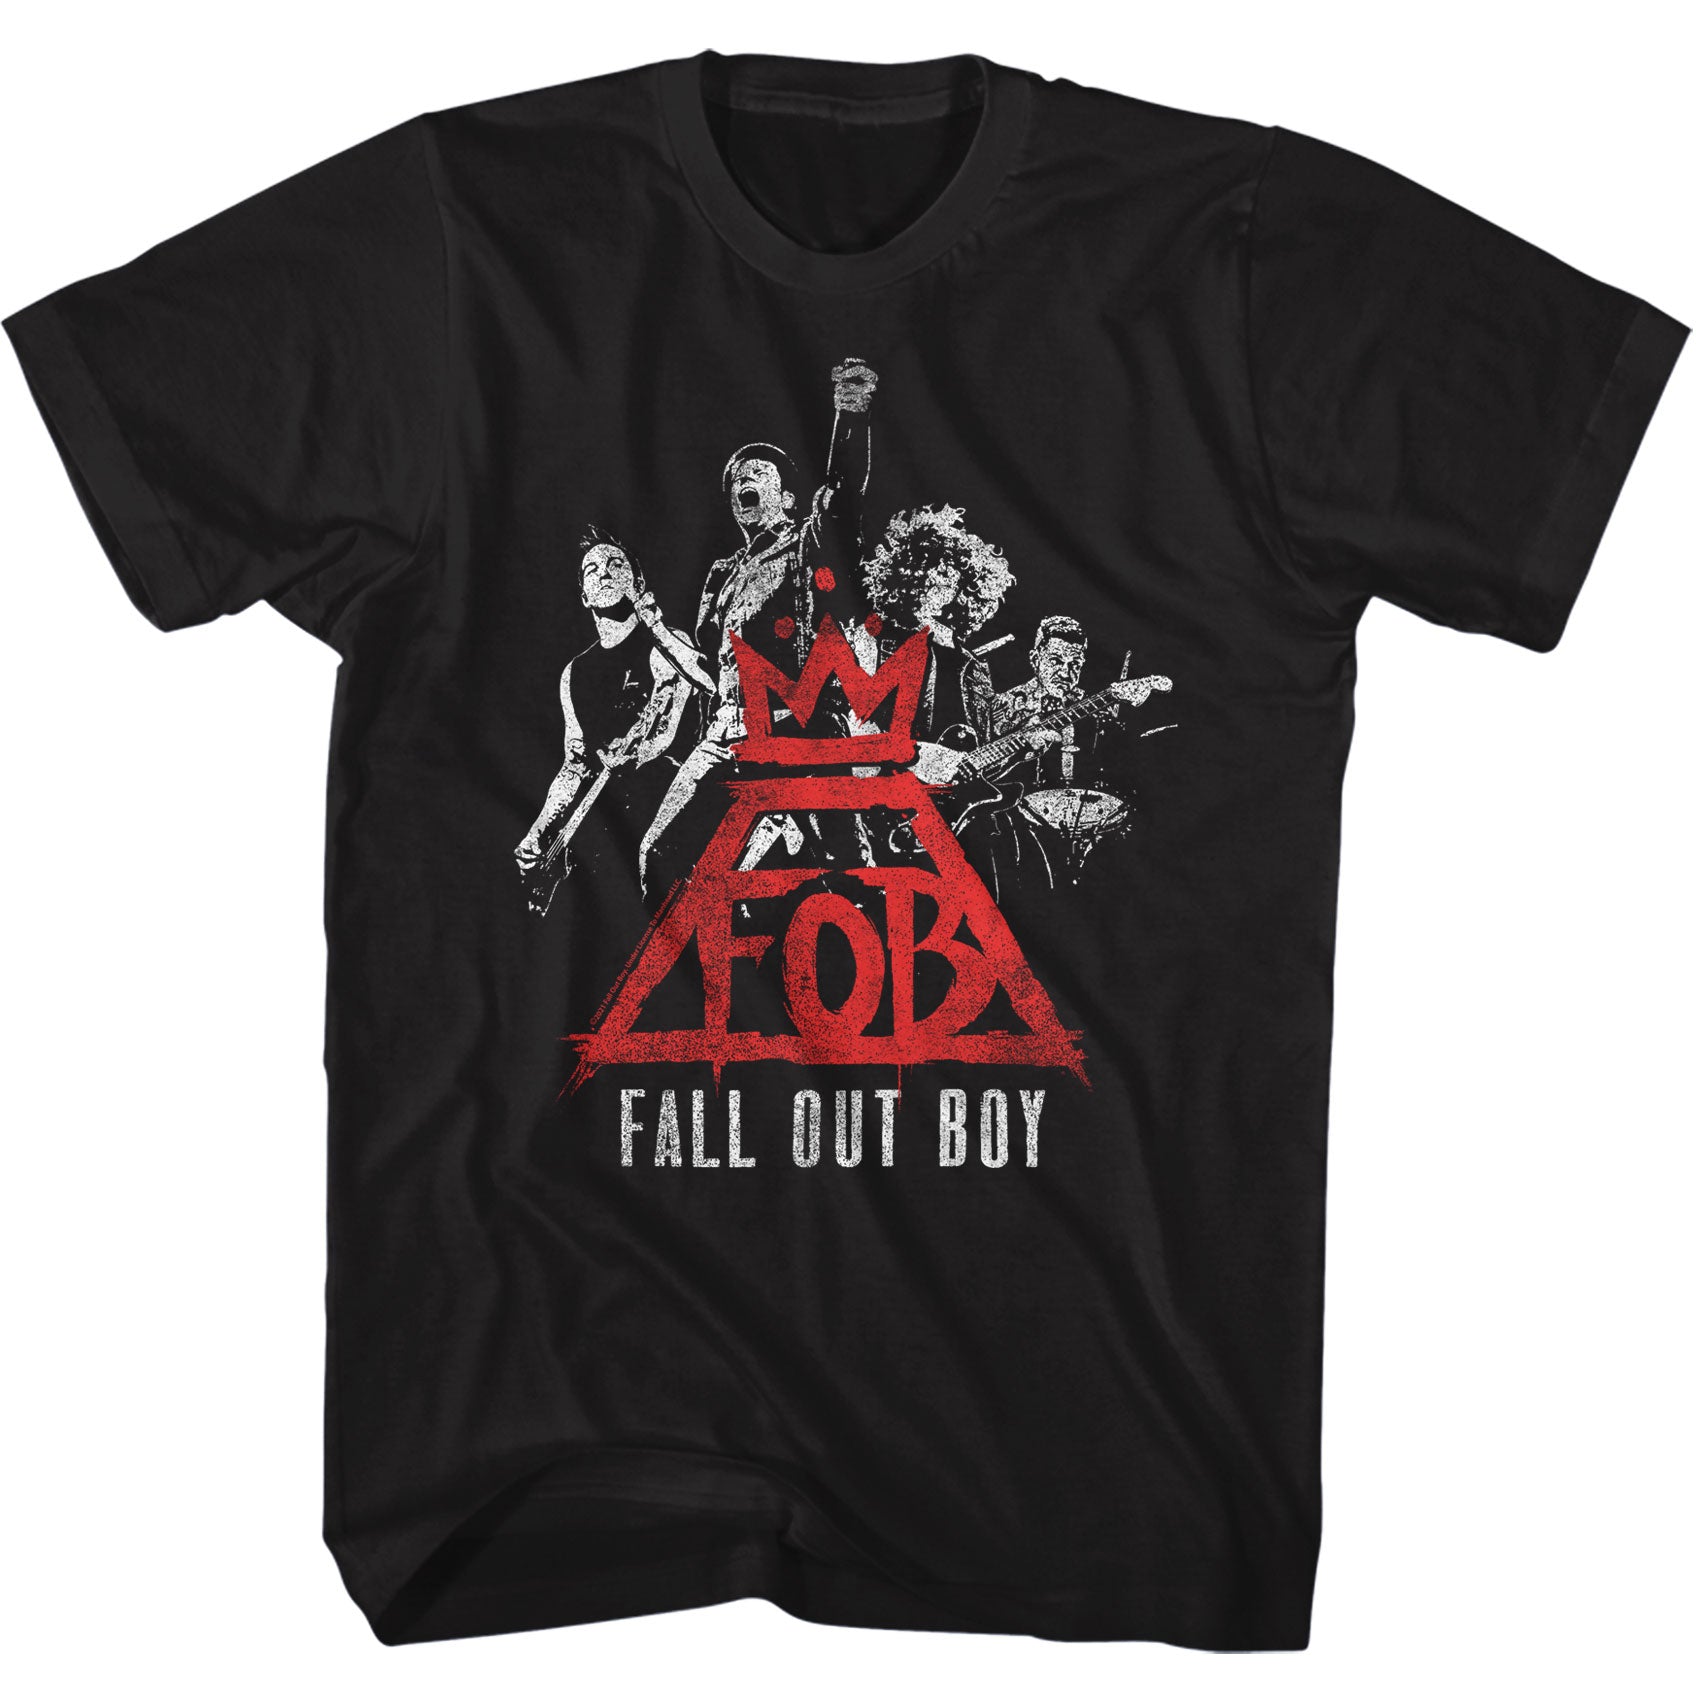 Fall Out Boy Band Logo Adult Black Tall Tee Shirt